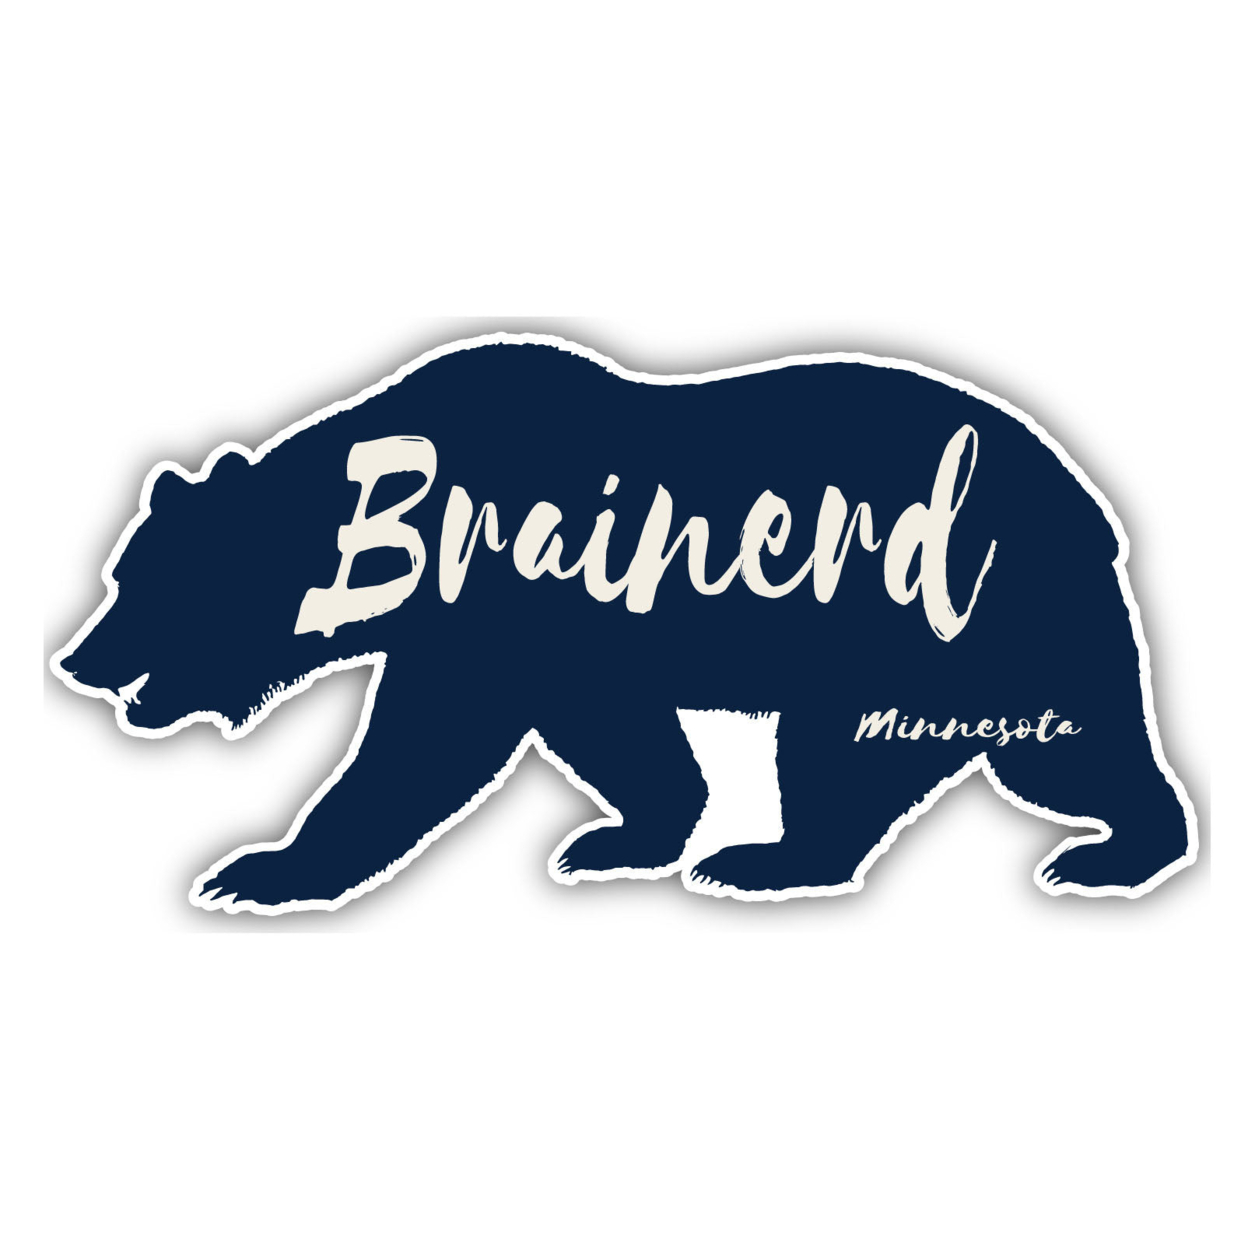 Brainerd Minnesota Souvenir Decorative Stickers (Choose Theme And Size) - Single Unit, 4-Inch, Tent